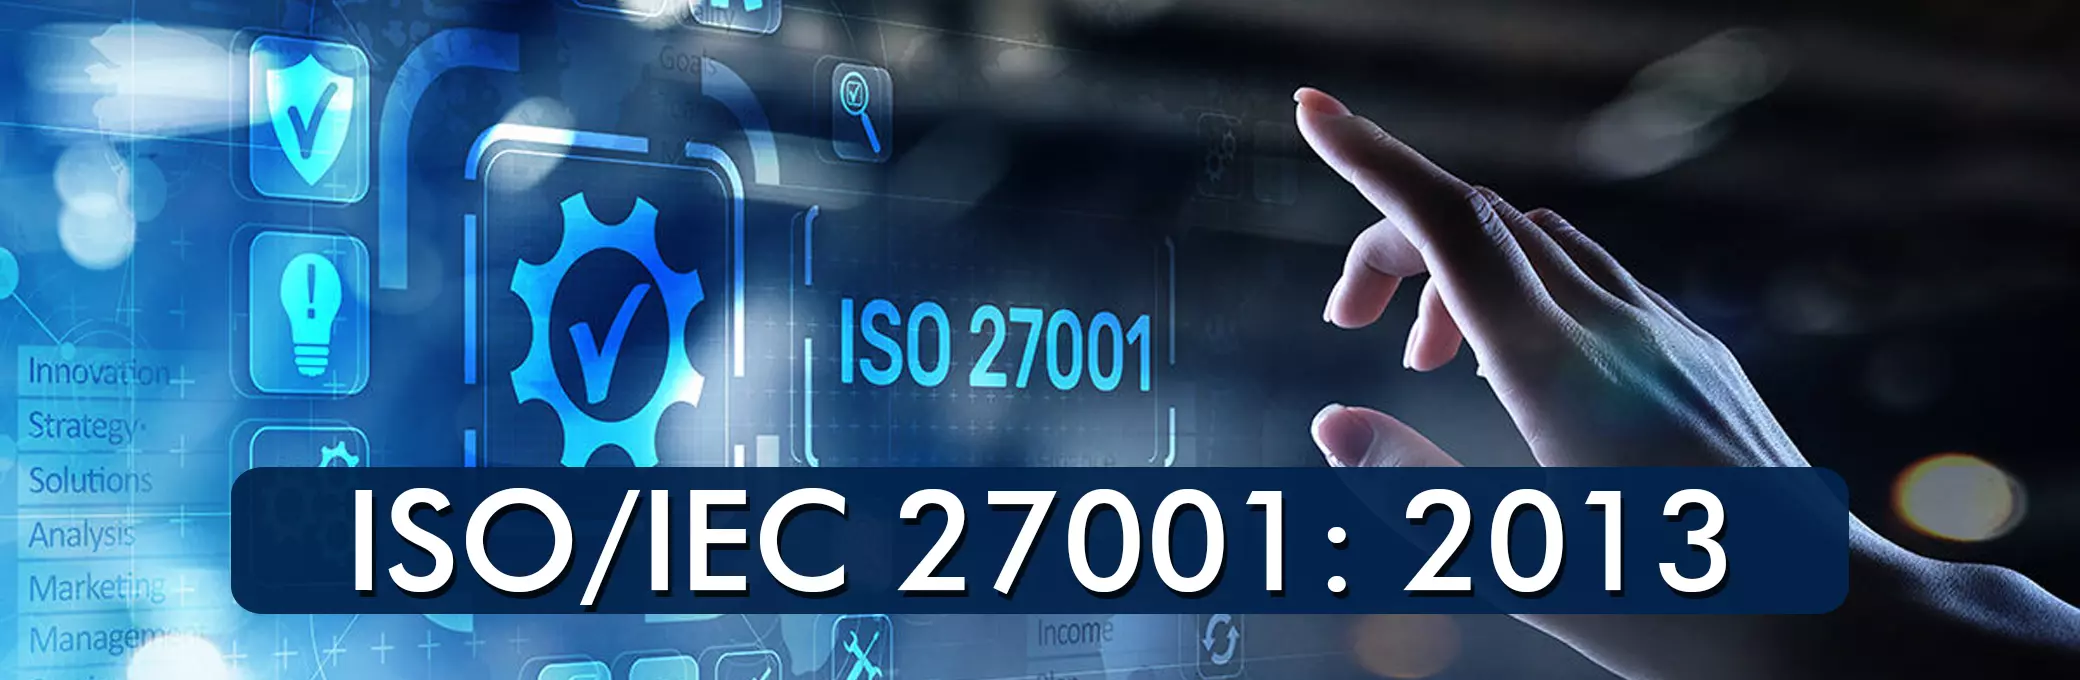 ISO-IEC-27001-2013